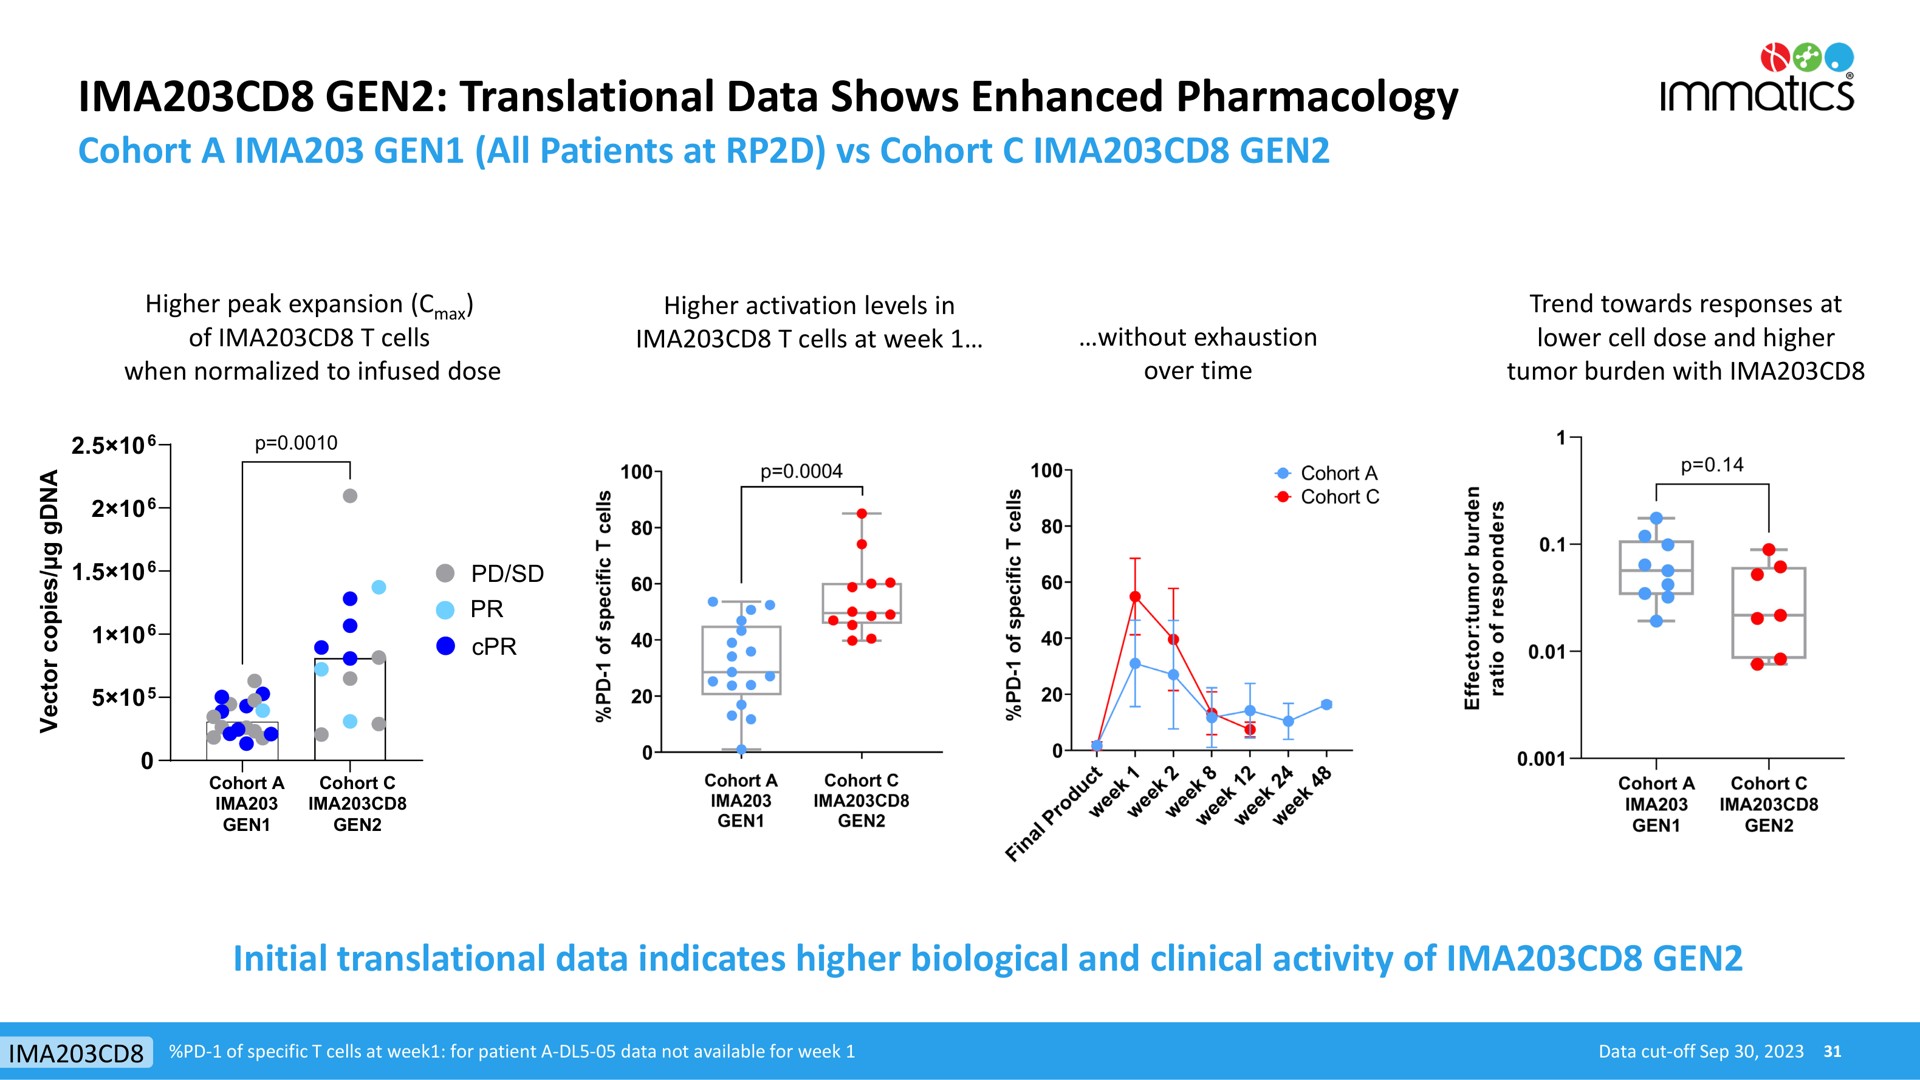 gen translational data shows enhanced pharmacology | Immatics